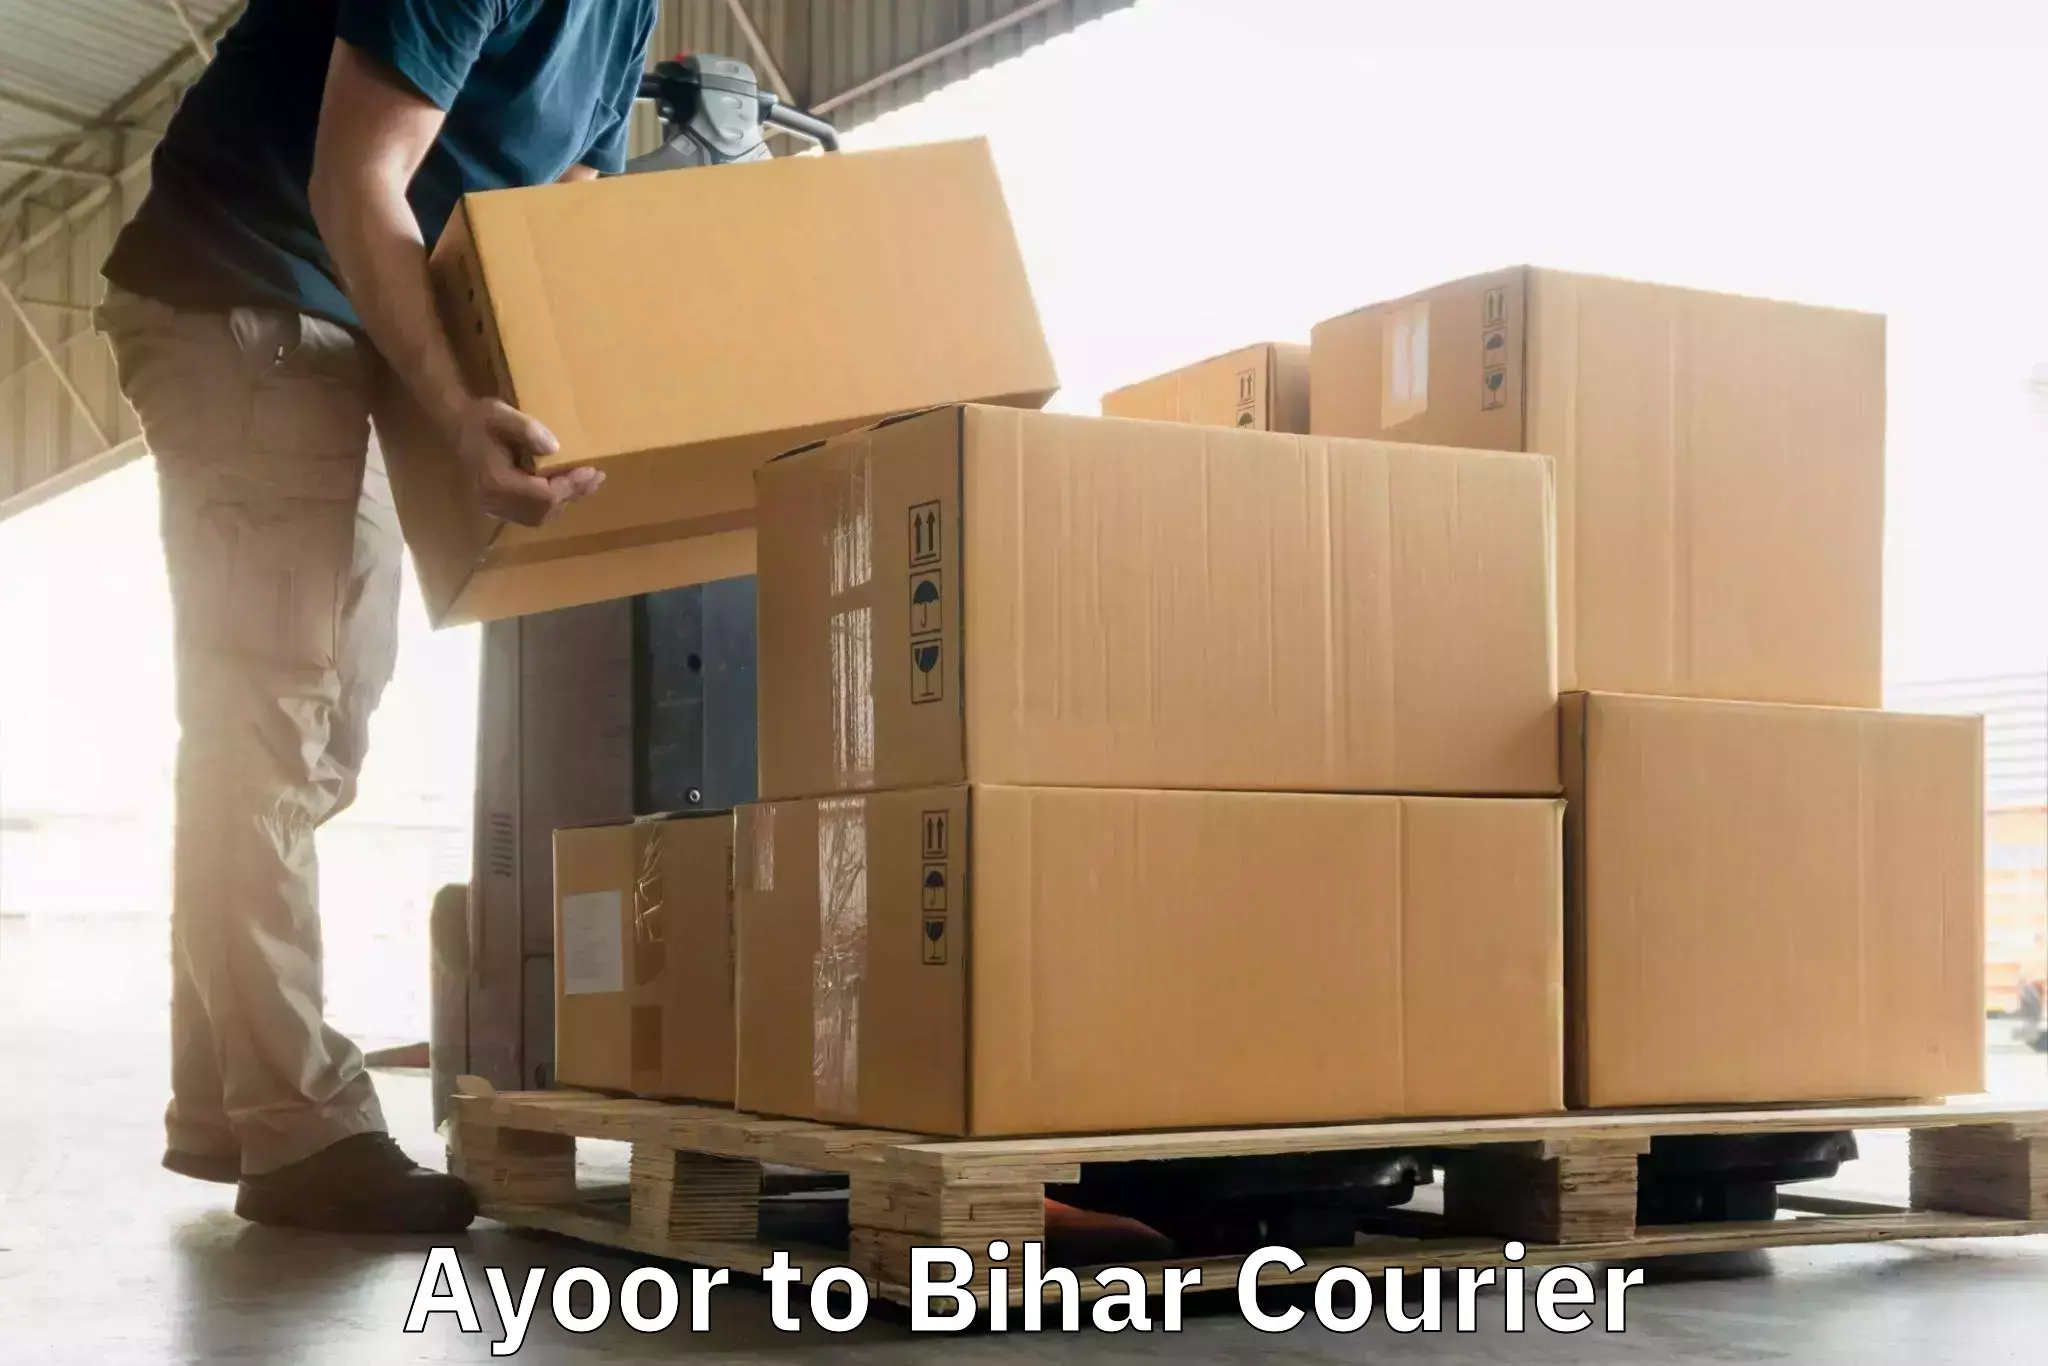 Efficient freight service Ayoor to Dinara